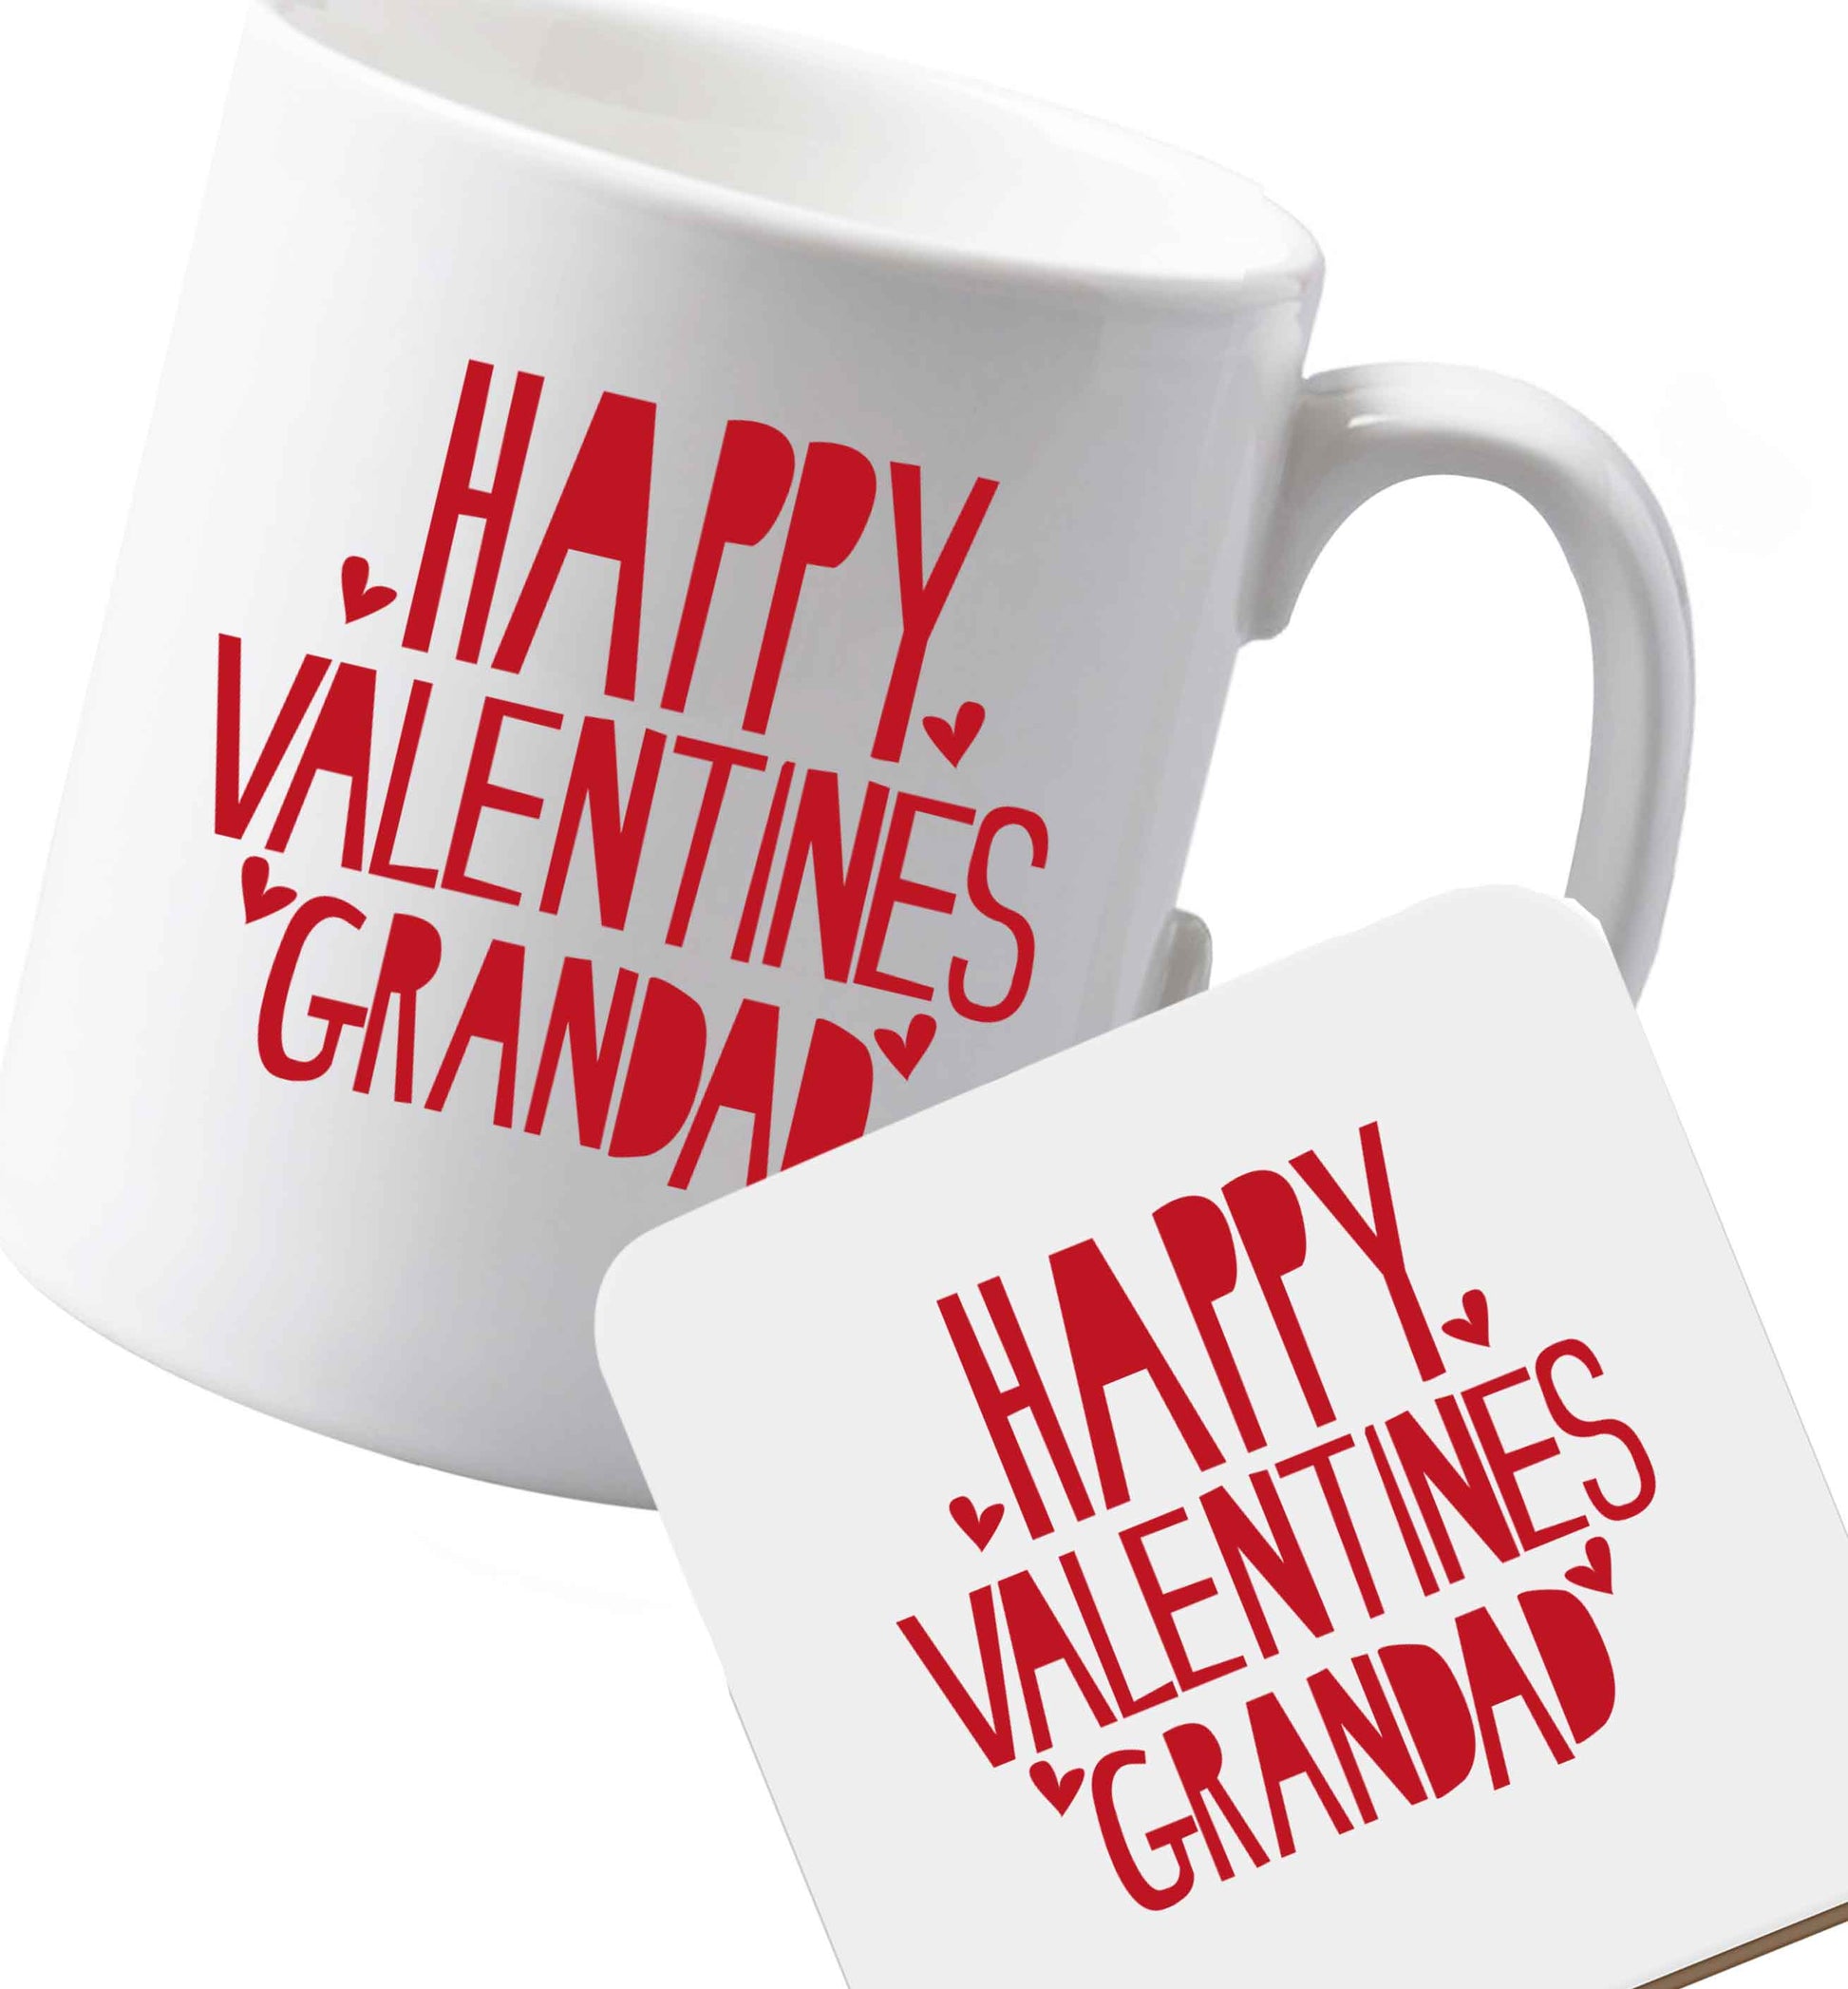 10 oz Ceramic mug and coaster Happy valentines grandad both sides